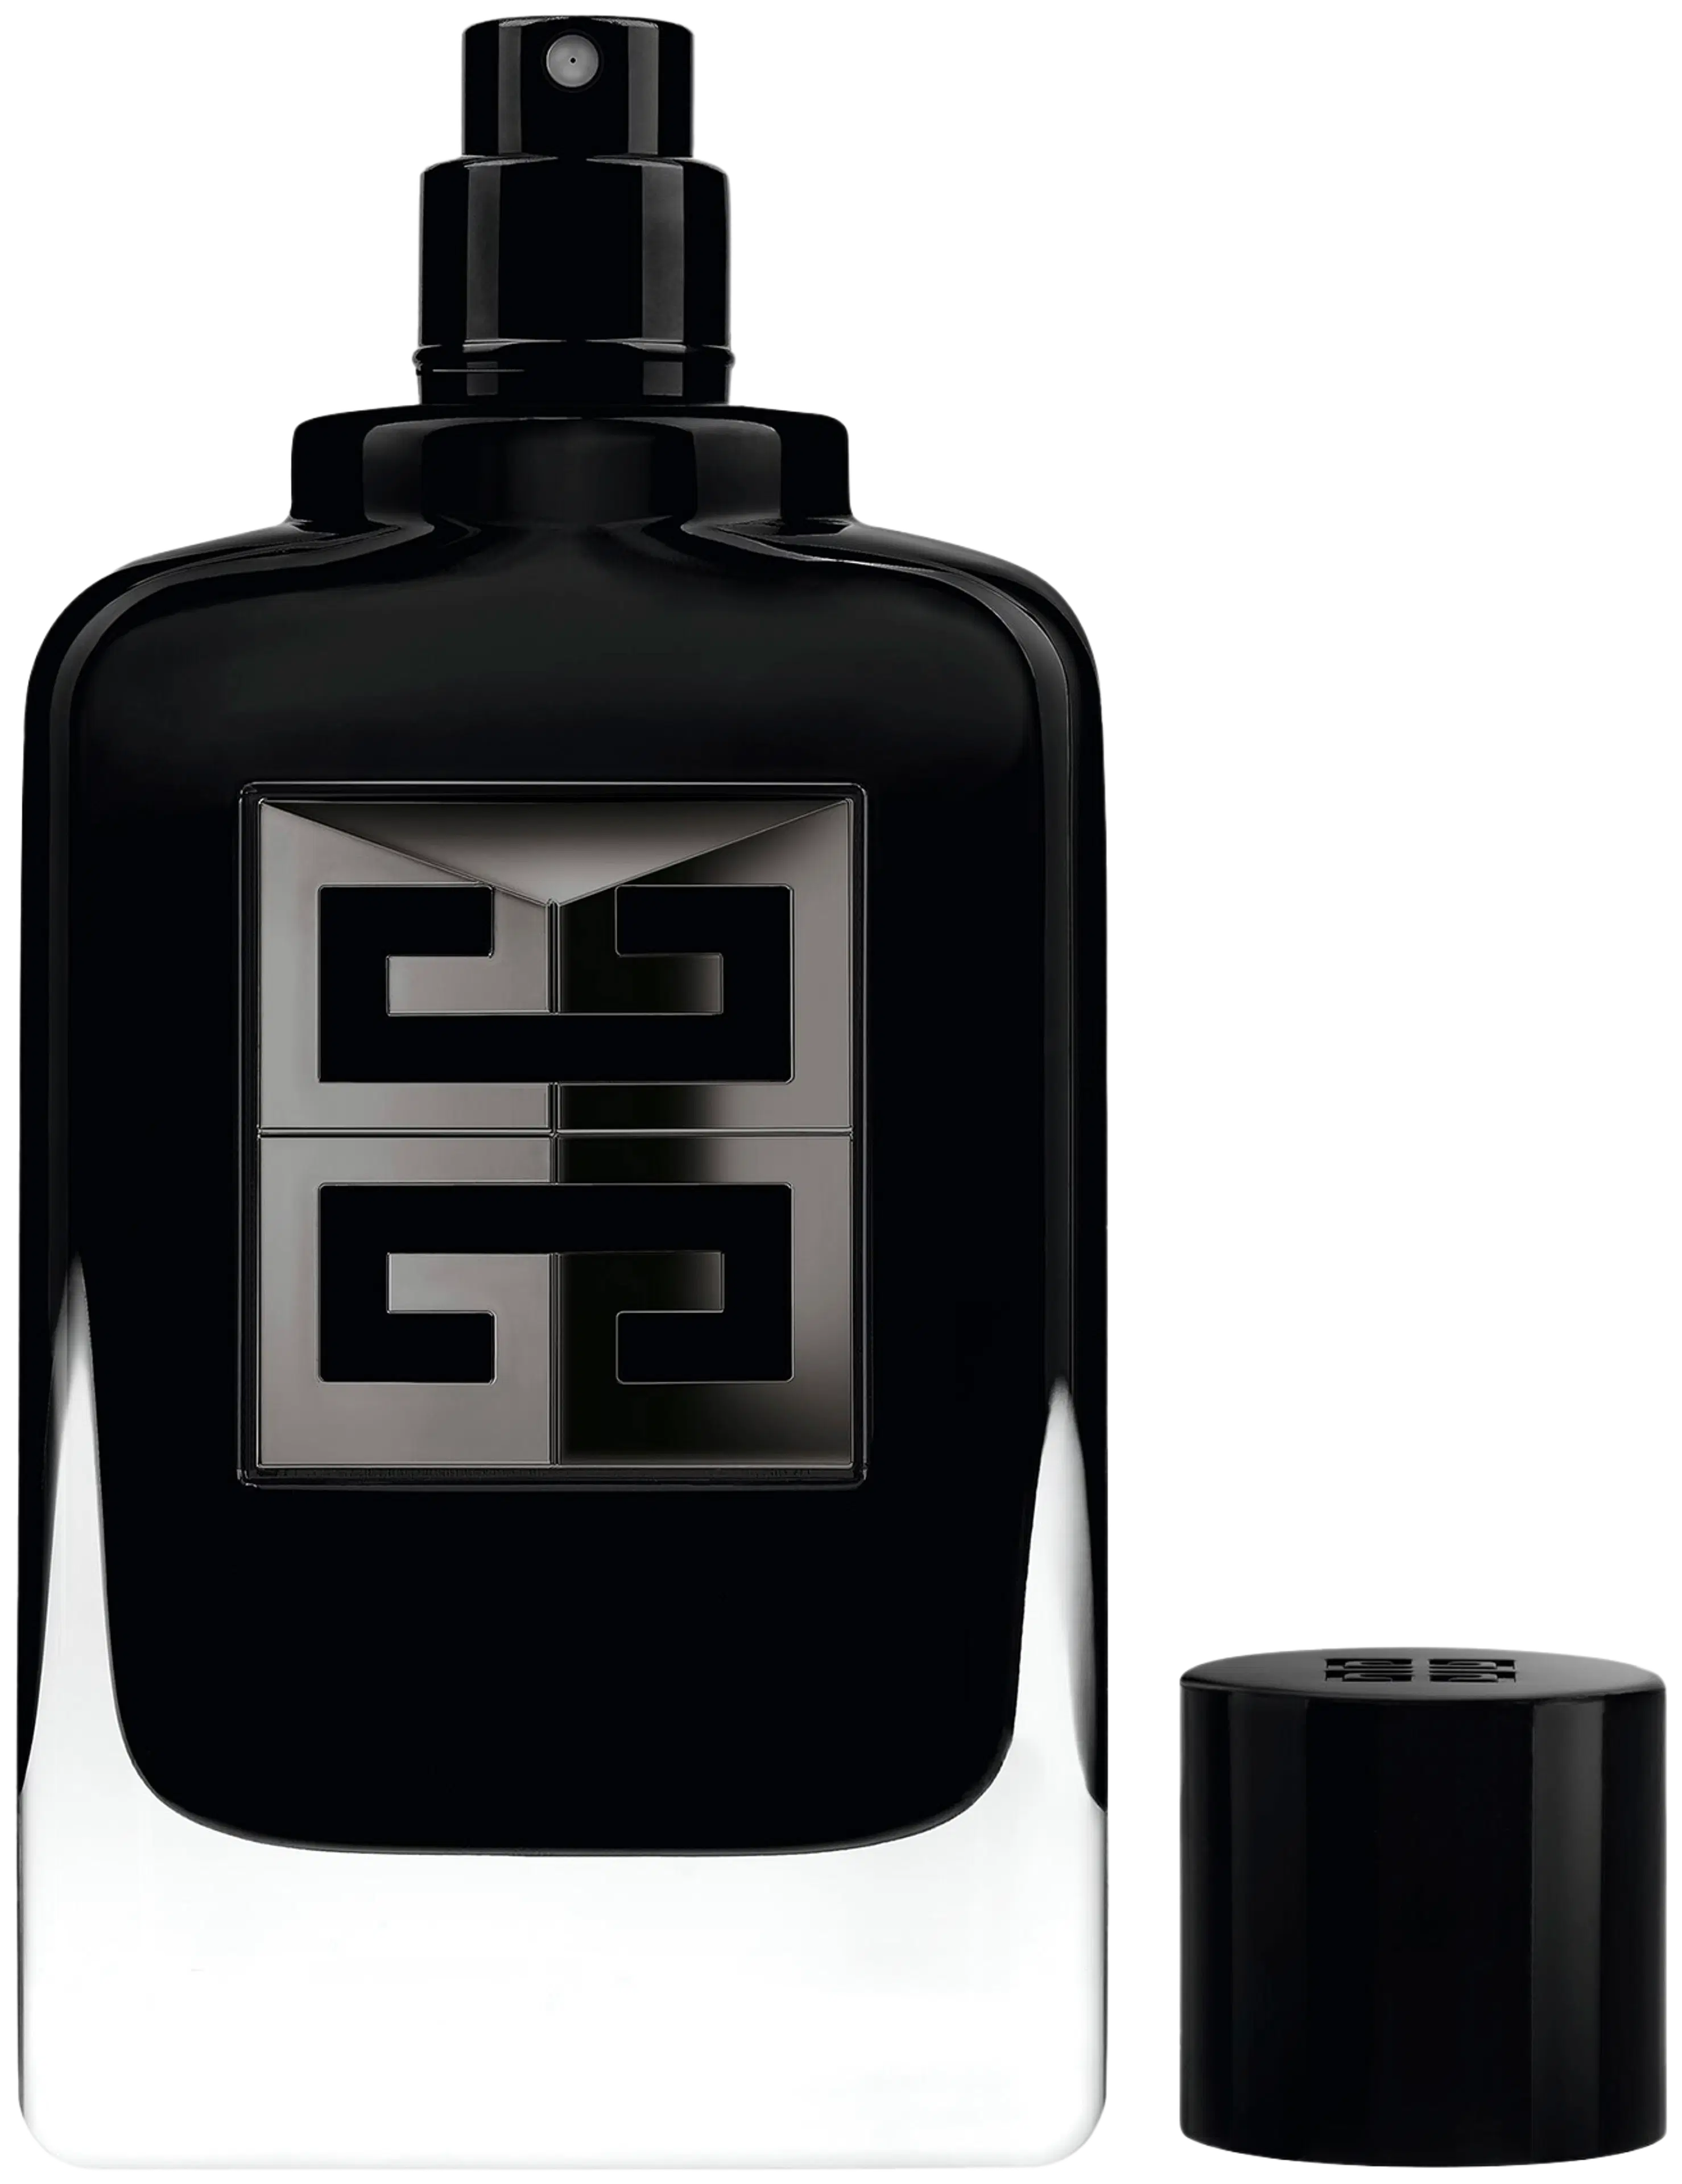 Givenchy Gentleman Society Extreme Eau de Parfum 60 ml